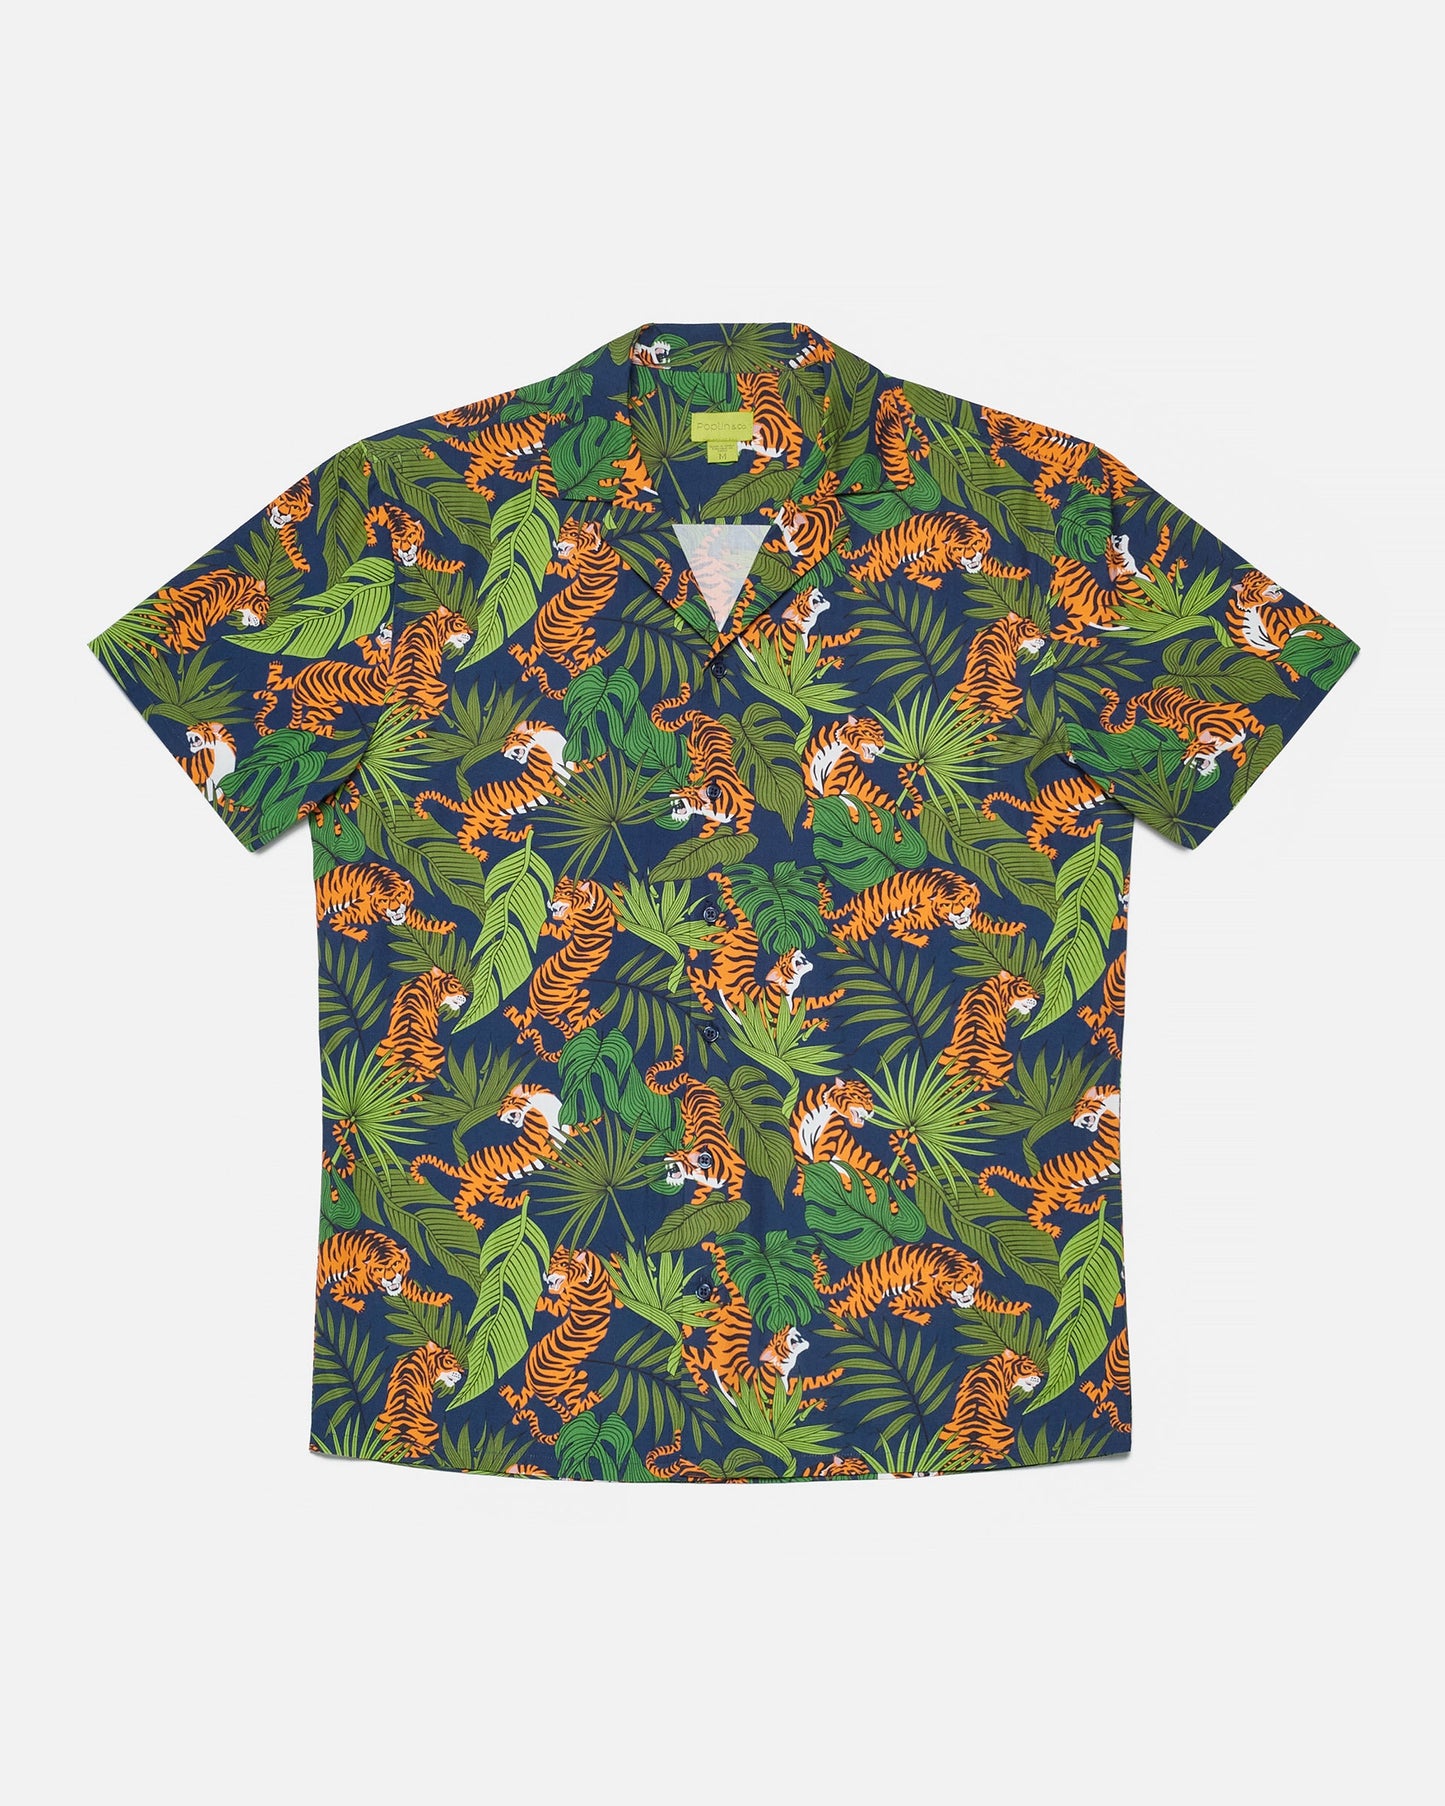 Wild Tigers Print Camp Shirt